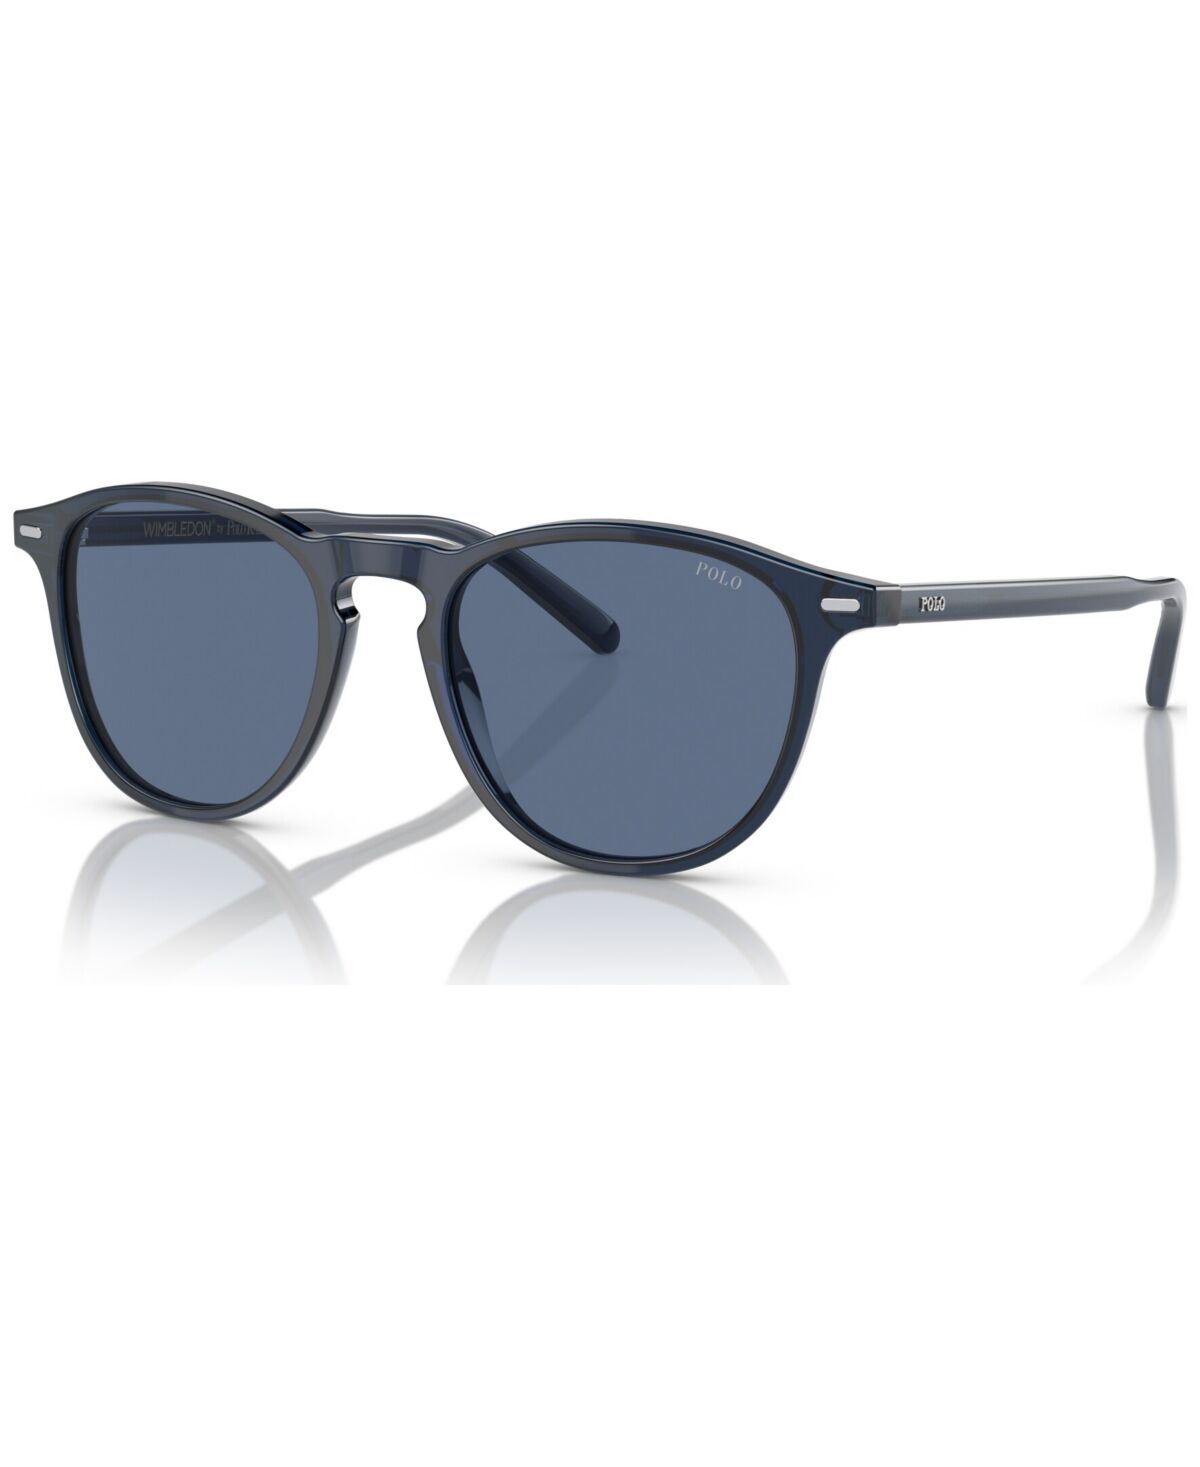 Ralph Lauren Polo Ralph Lauren Men's Sunglasses, PH4181 - Shiny Transparent Navy Blue